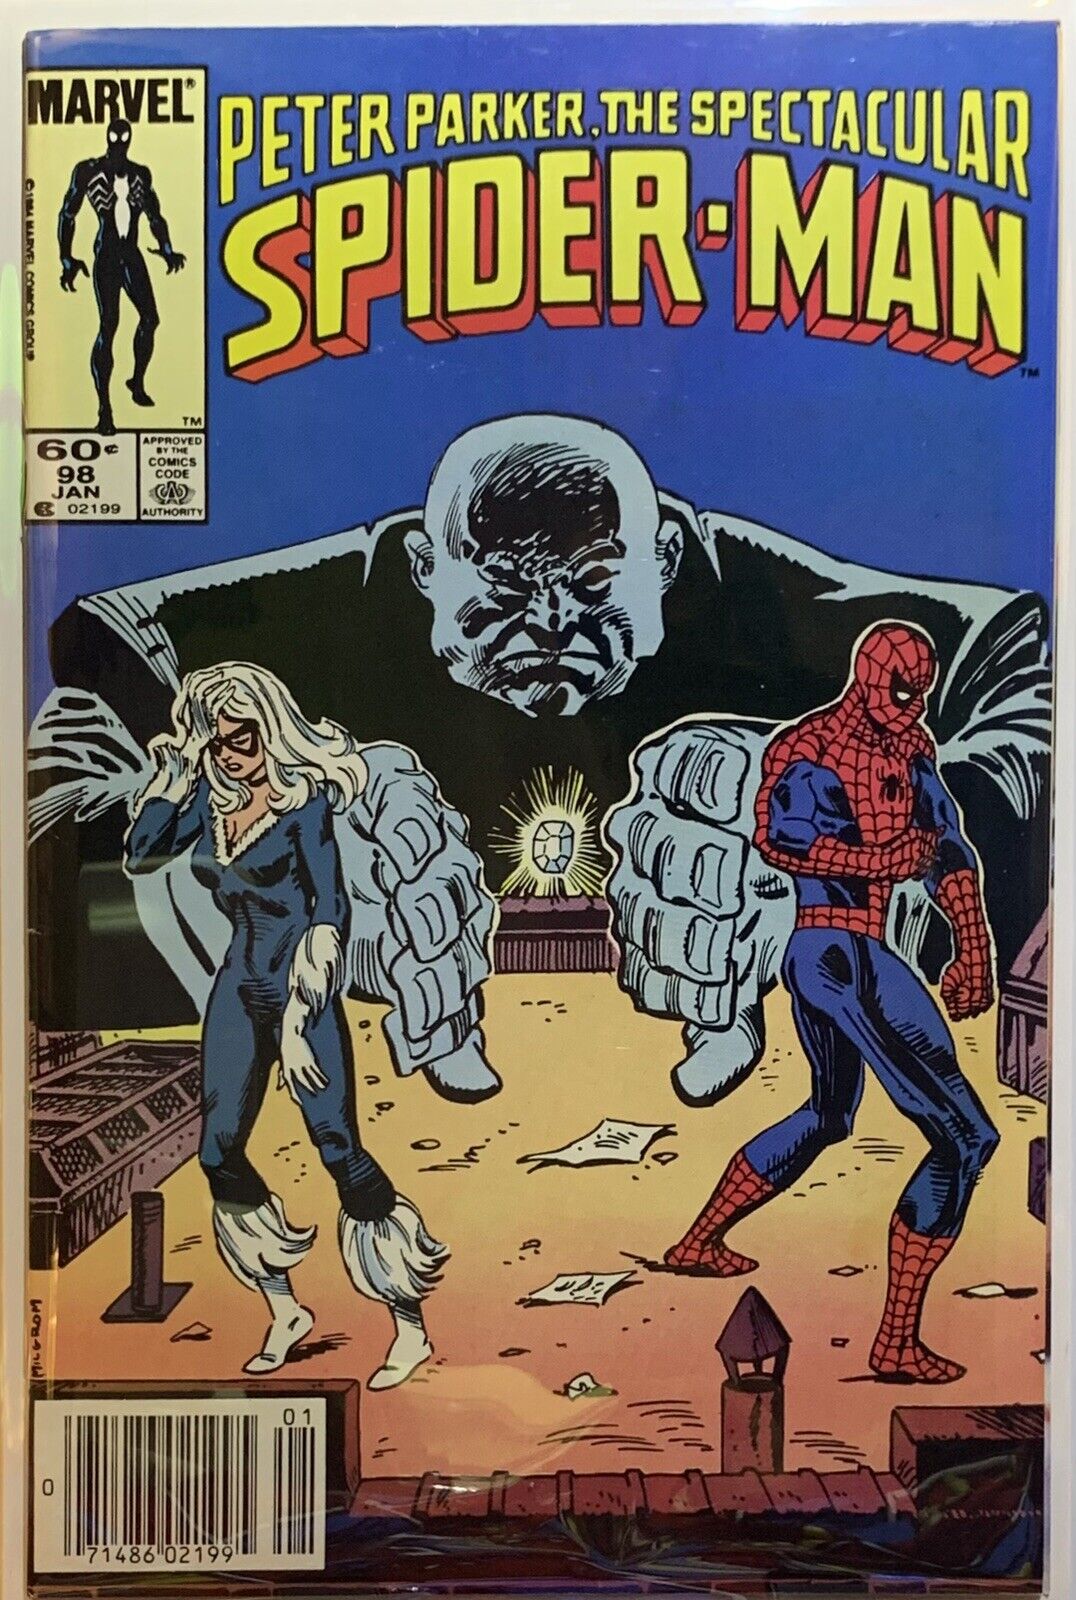 PETER PARKER THE SPECTACULAR SPIDER-MAN #98🔥(1ST APPEARANCE OF SPOT) MARVEL